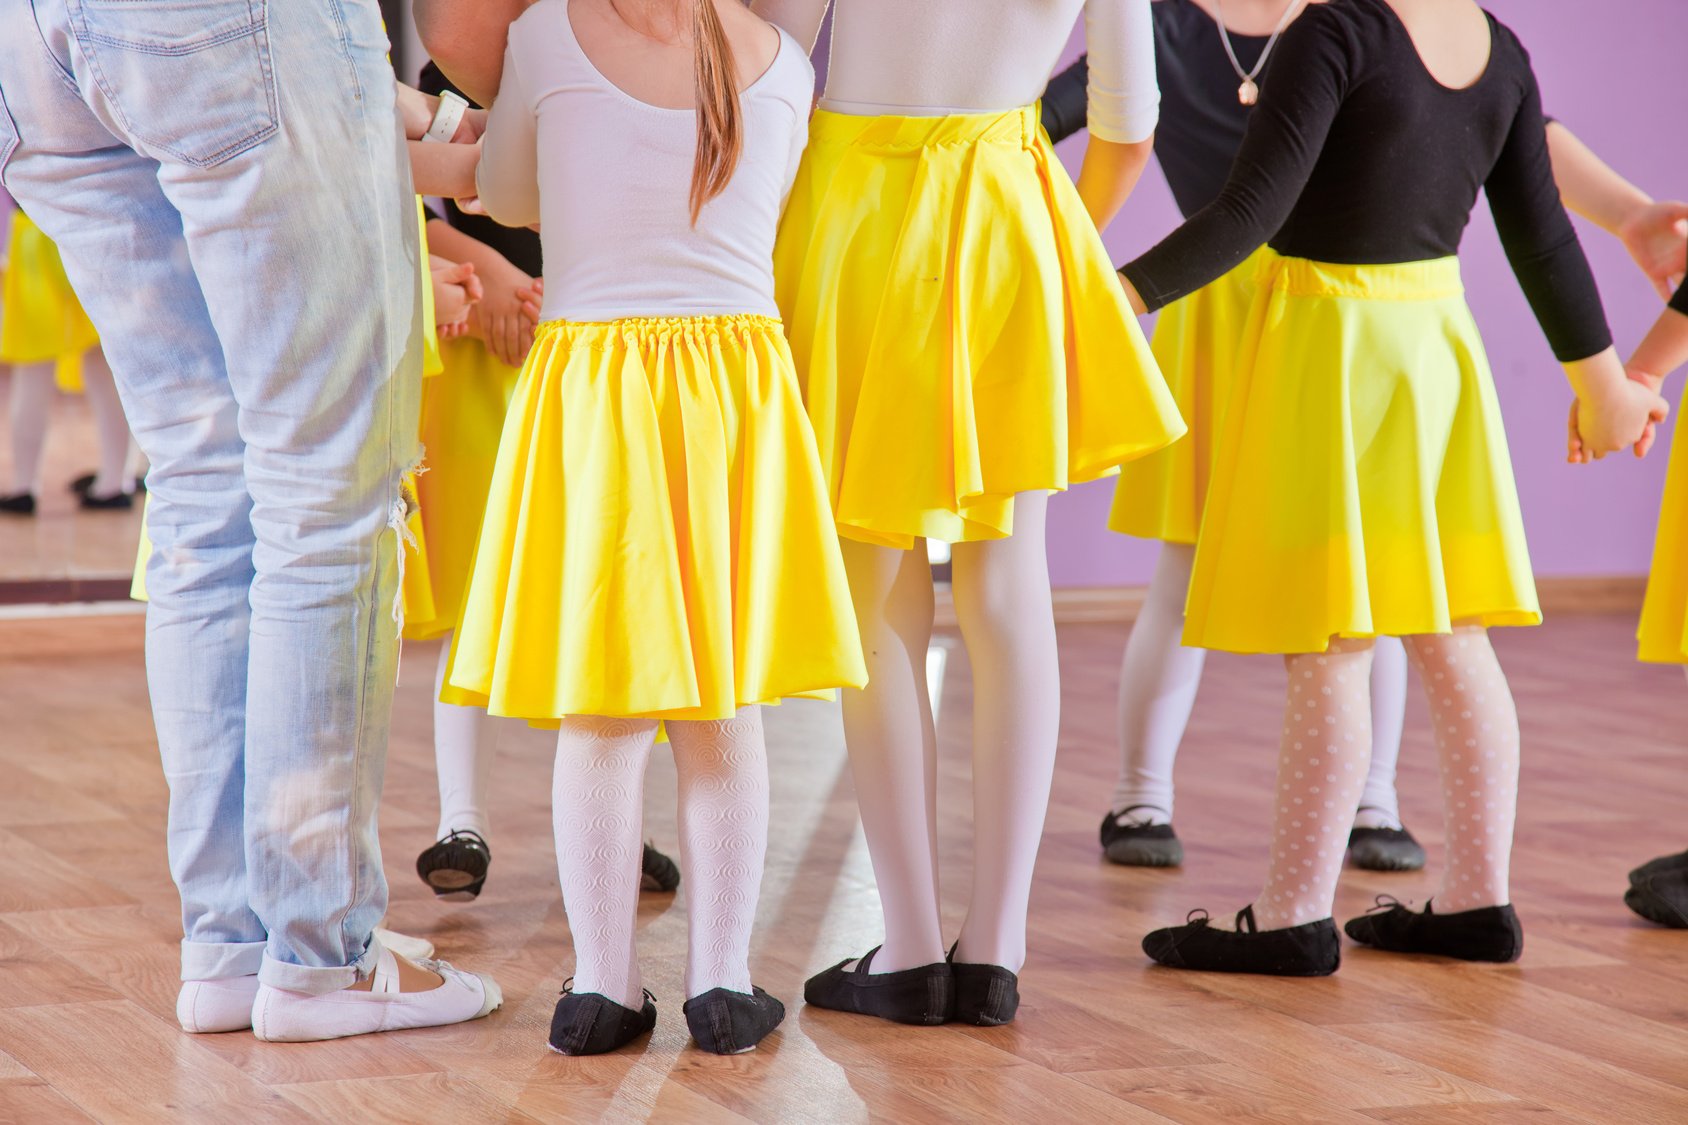 Ballet dancers children in class, legs only